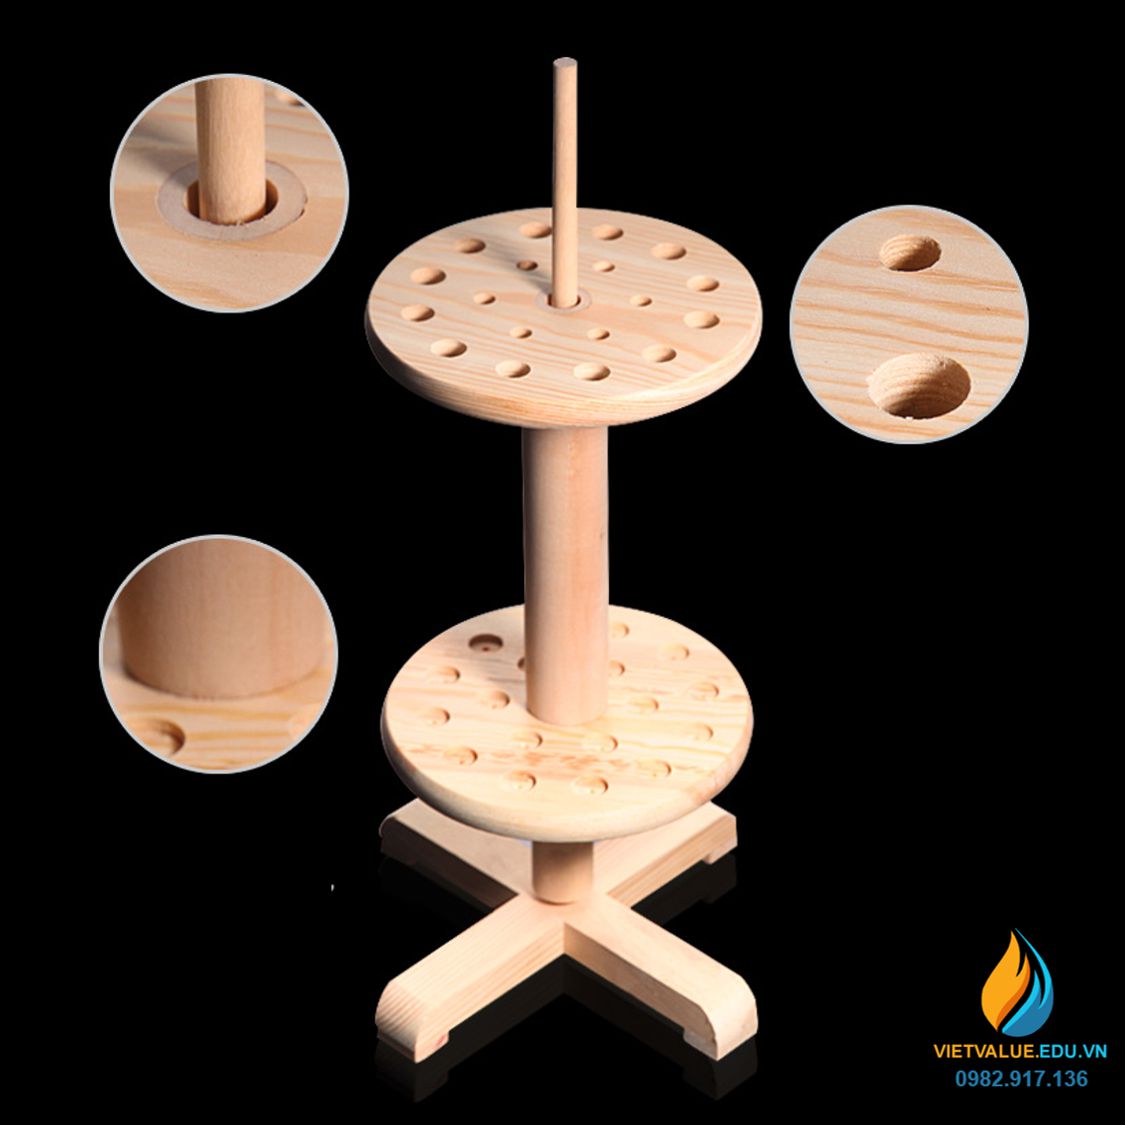 Giá treo micropipet tròn 15 lỗ, model W-000702, chất liệu gỗ